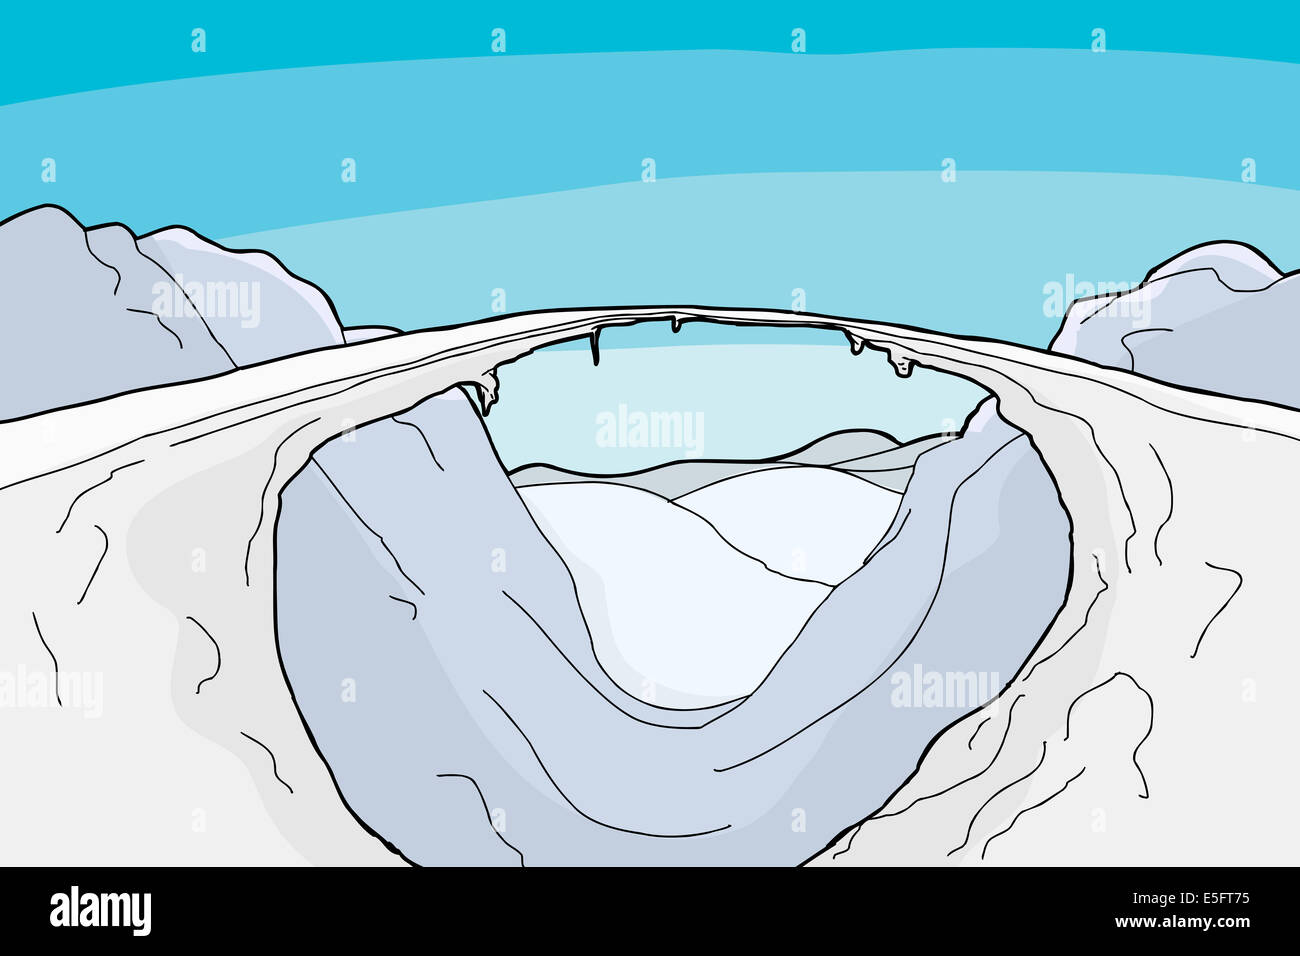 Ice bridge across mountain valley cartoon background Stock Photo - Alamy